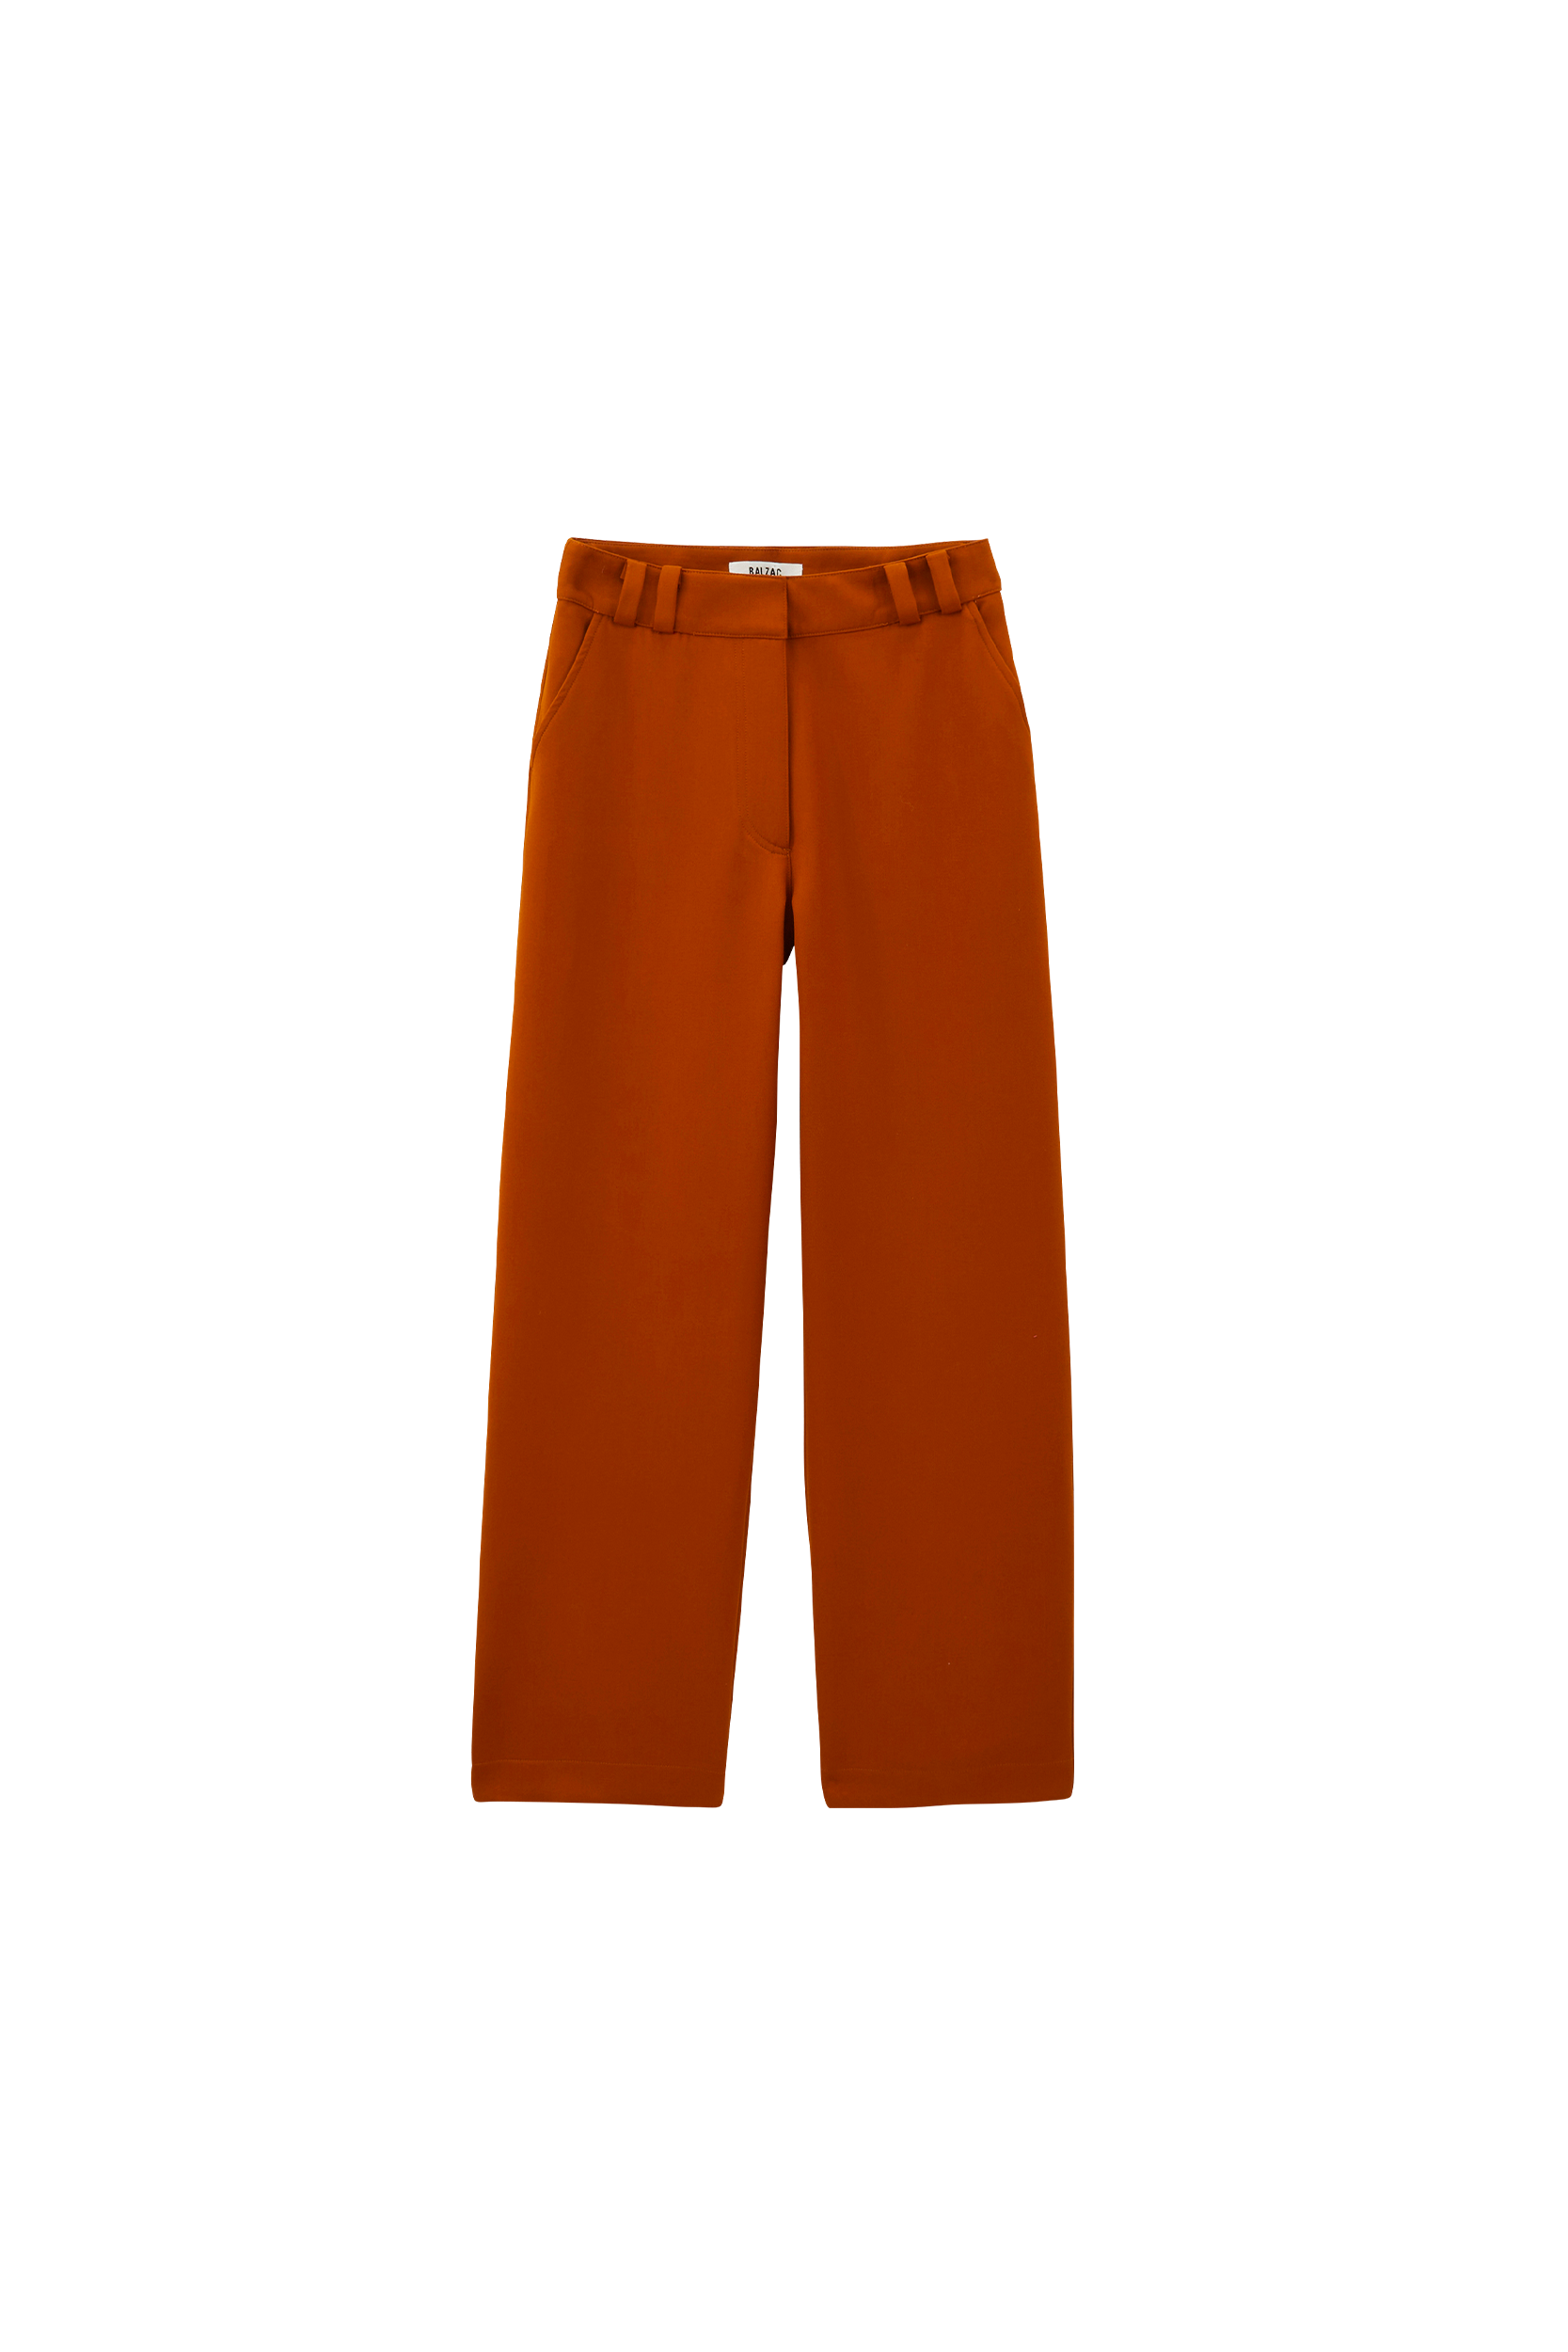 Buy Ocean Terracotta Trousers Linen Pants Linen Trousers Linen Culottes  Washed Linen Pants Simple Linen Pants Wide Linen Pants Online in India -  Etsy